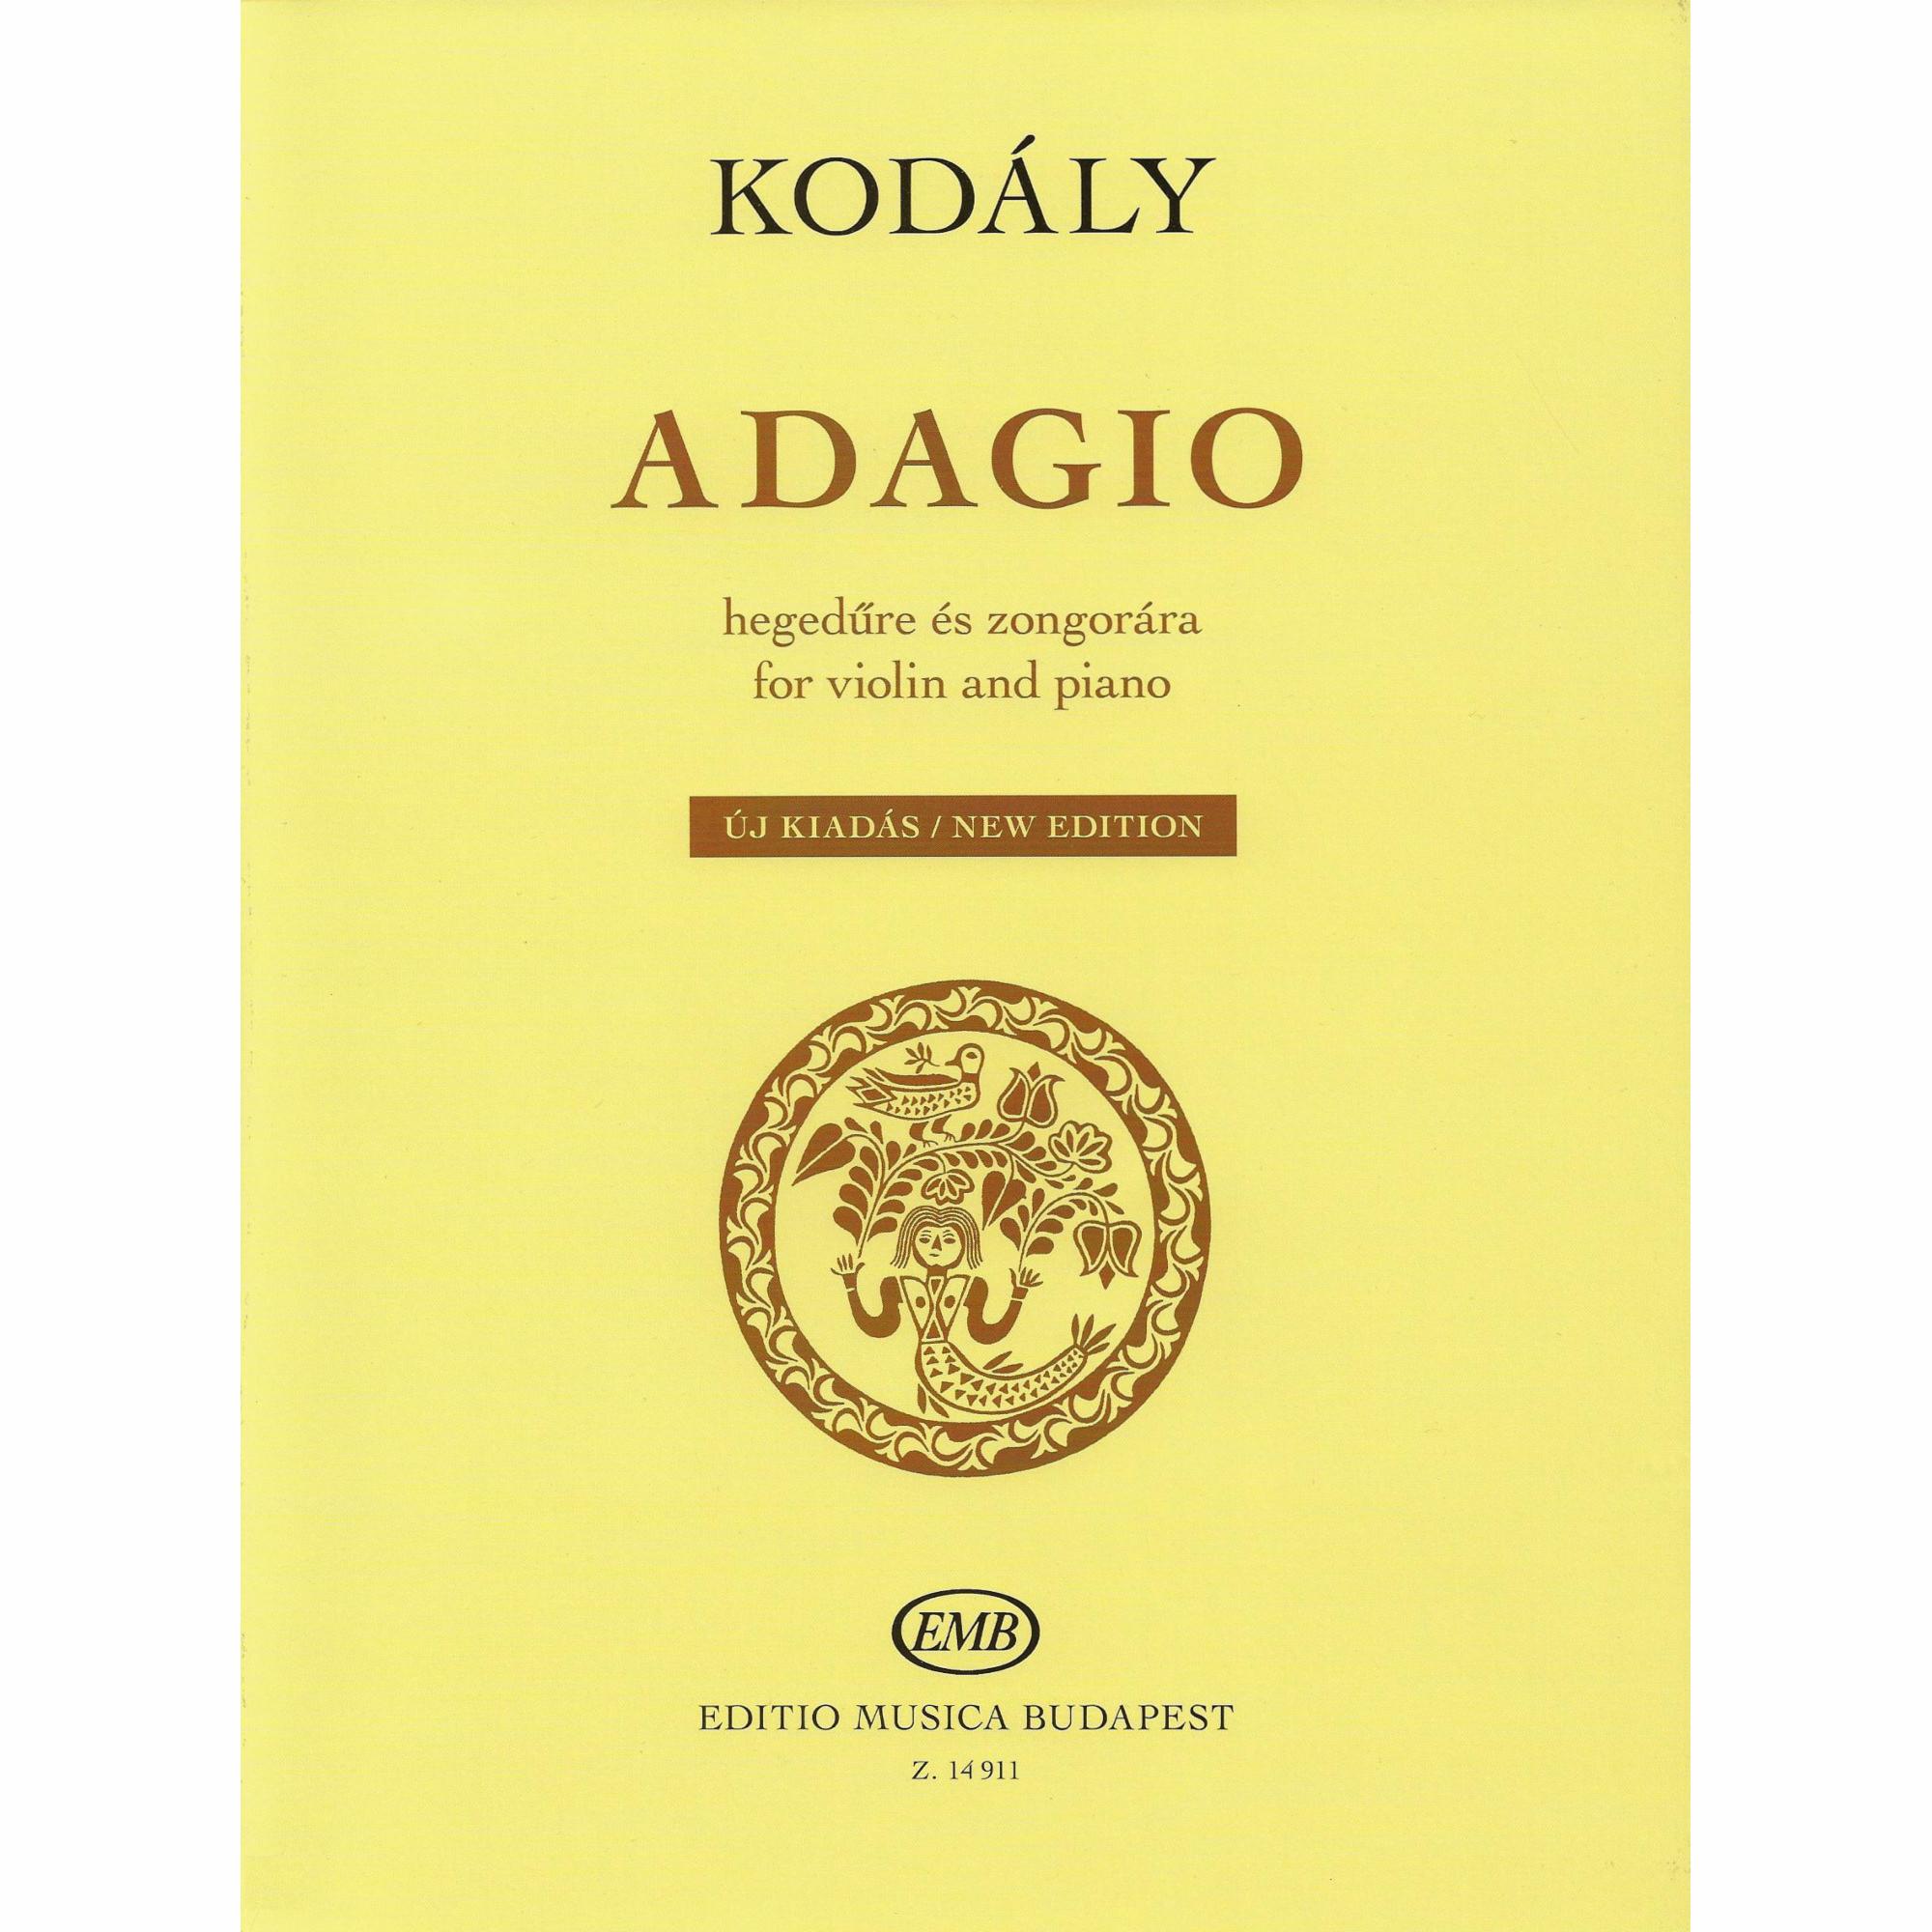 Kodaly -- Adagio for Violin and Piano